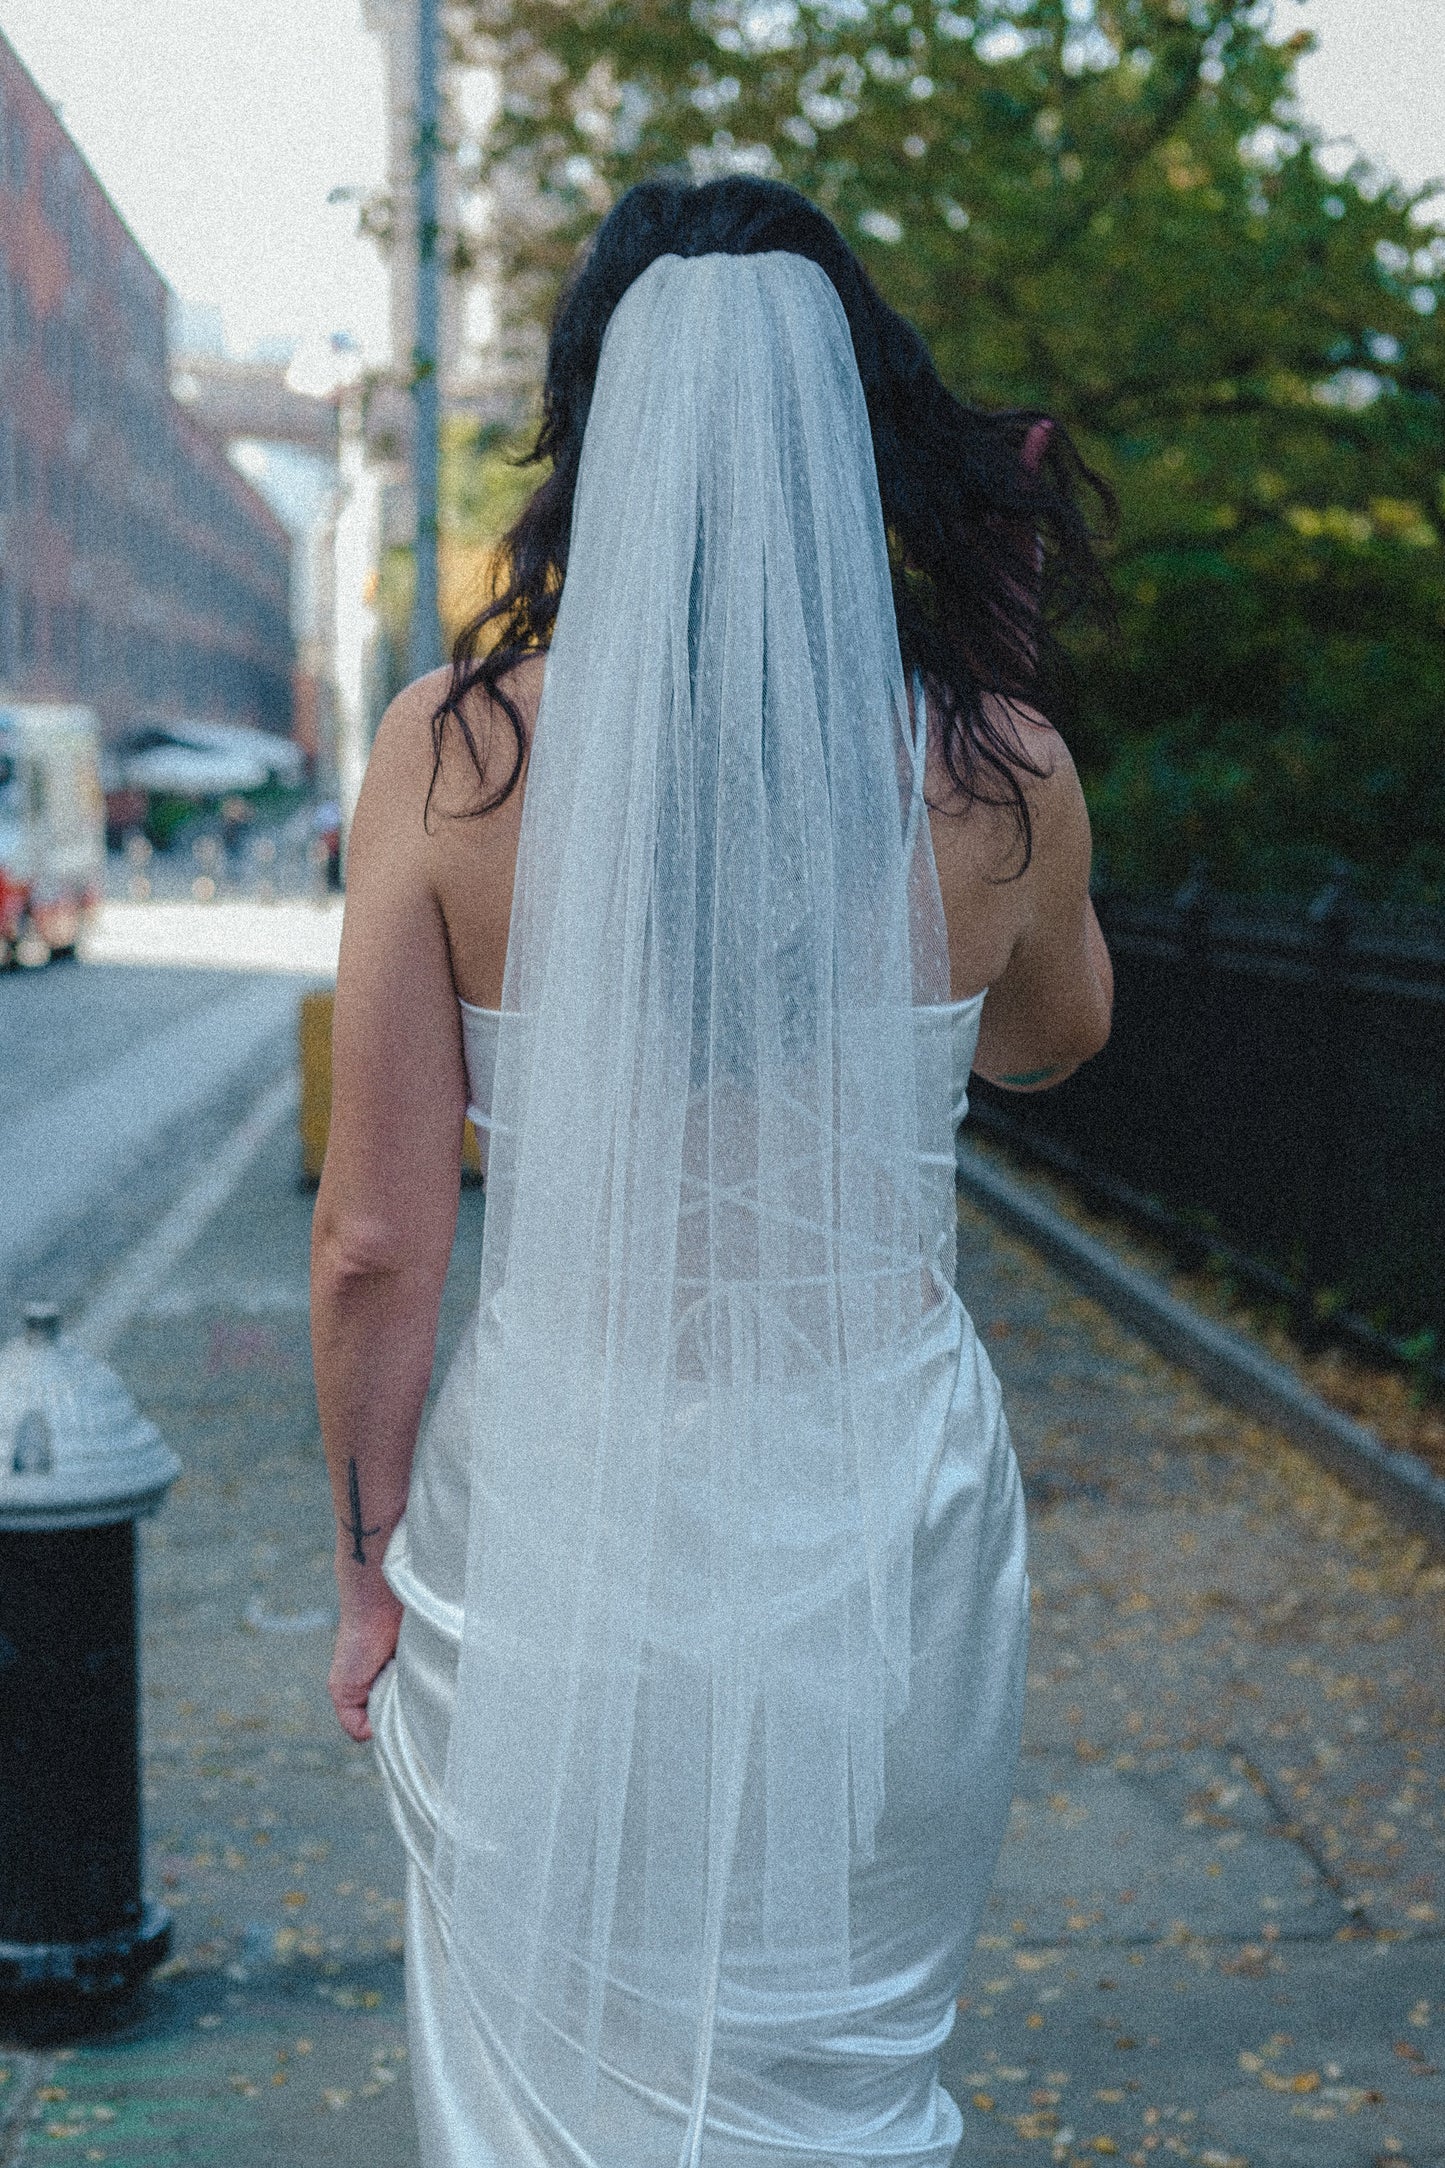 point d' esprit fingertip length bridal veil on scrappy satin slim sheath dress as bride walks through New York City 